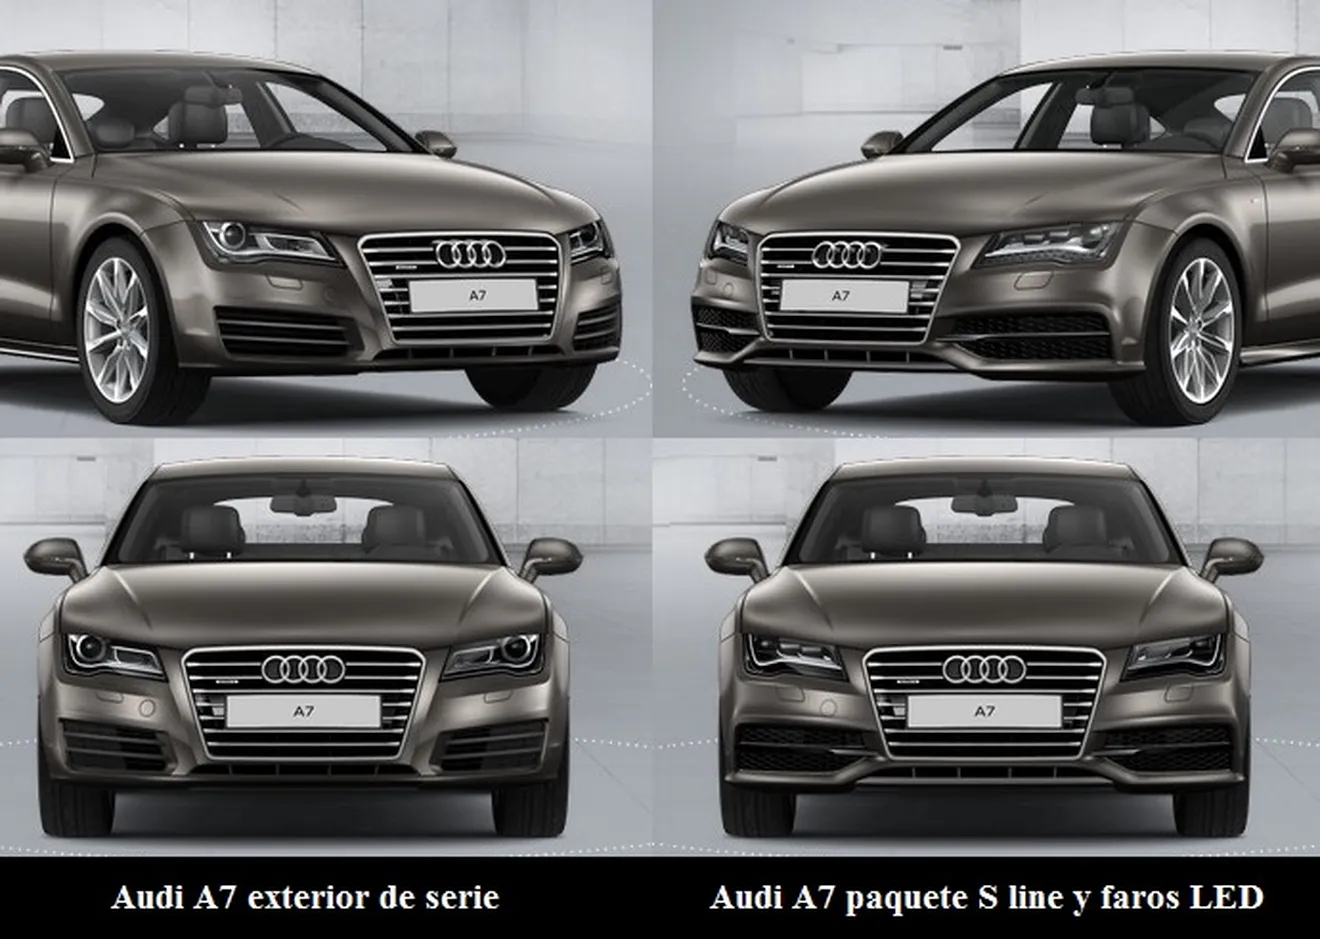 Comparación Audi A7 exterior de serie vs Audi A7 paquete S line y faros LED